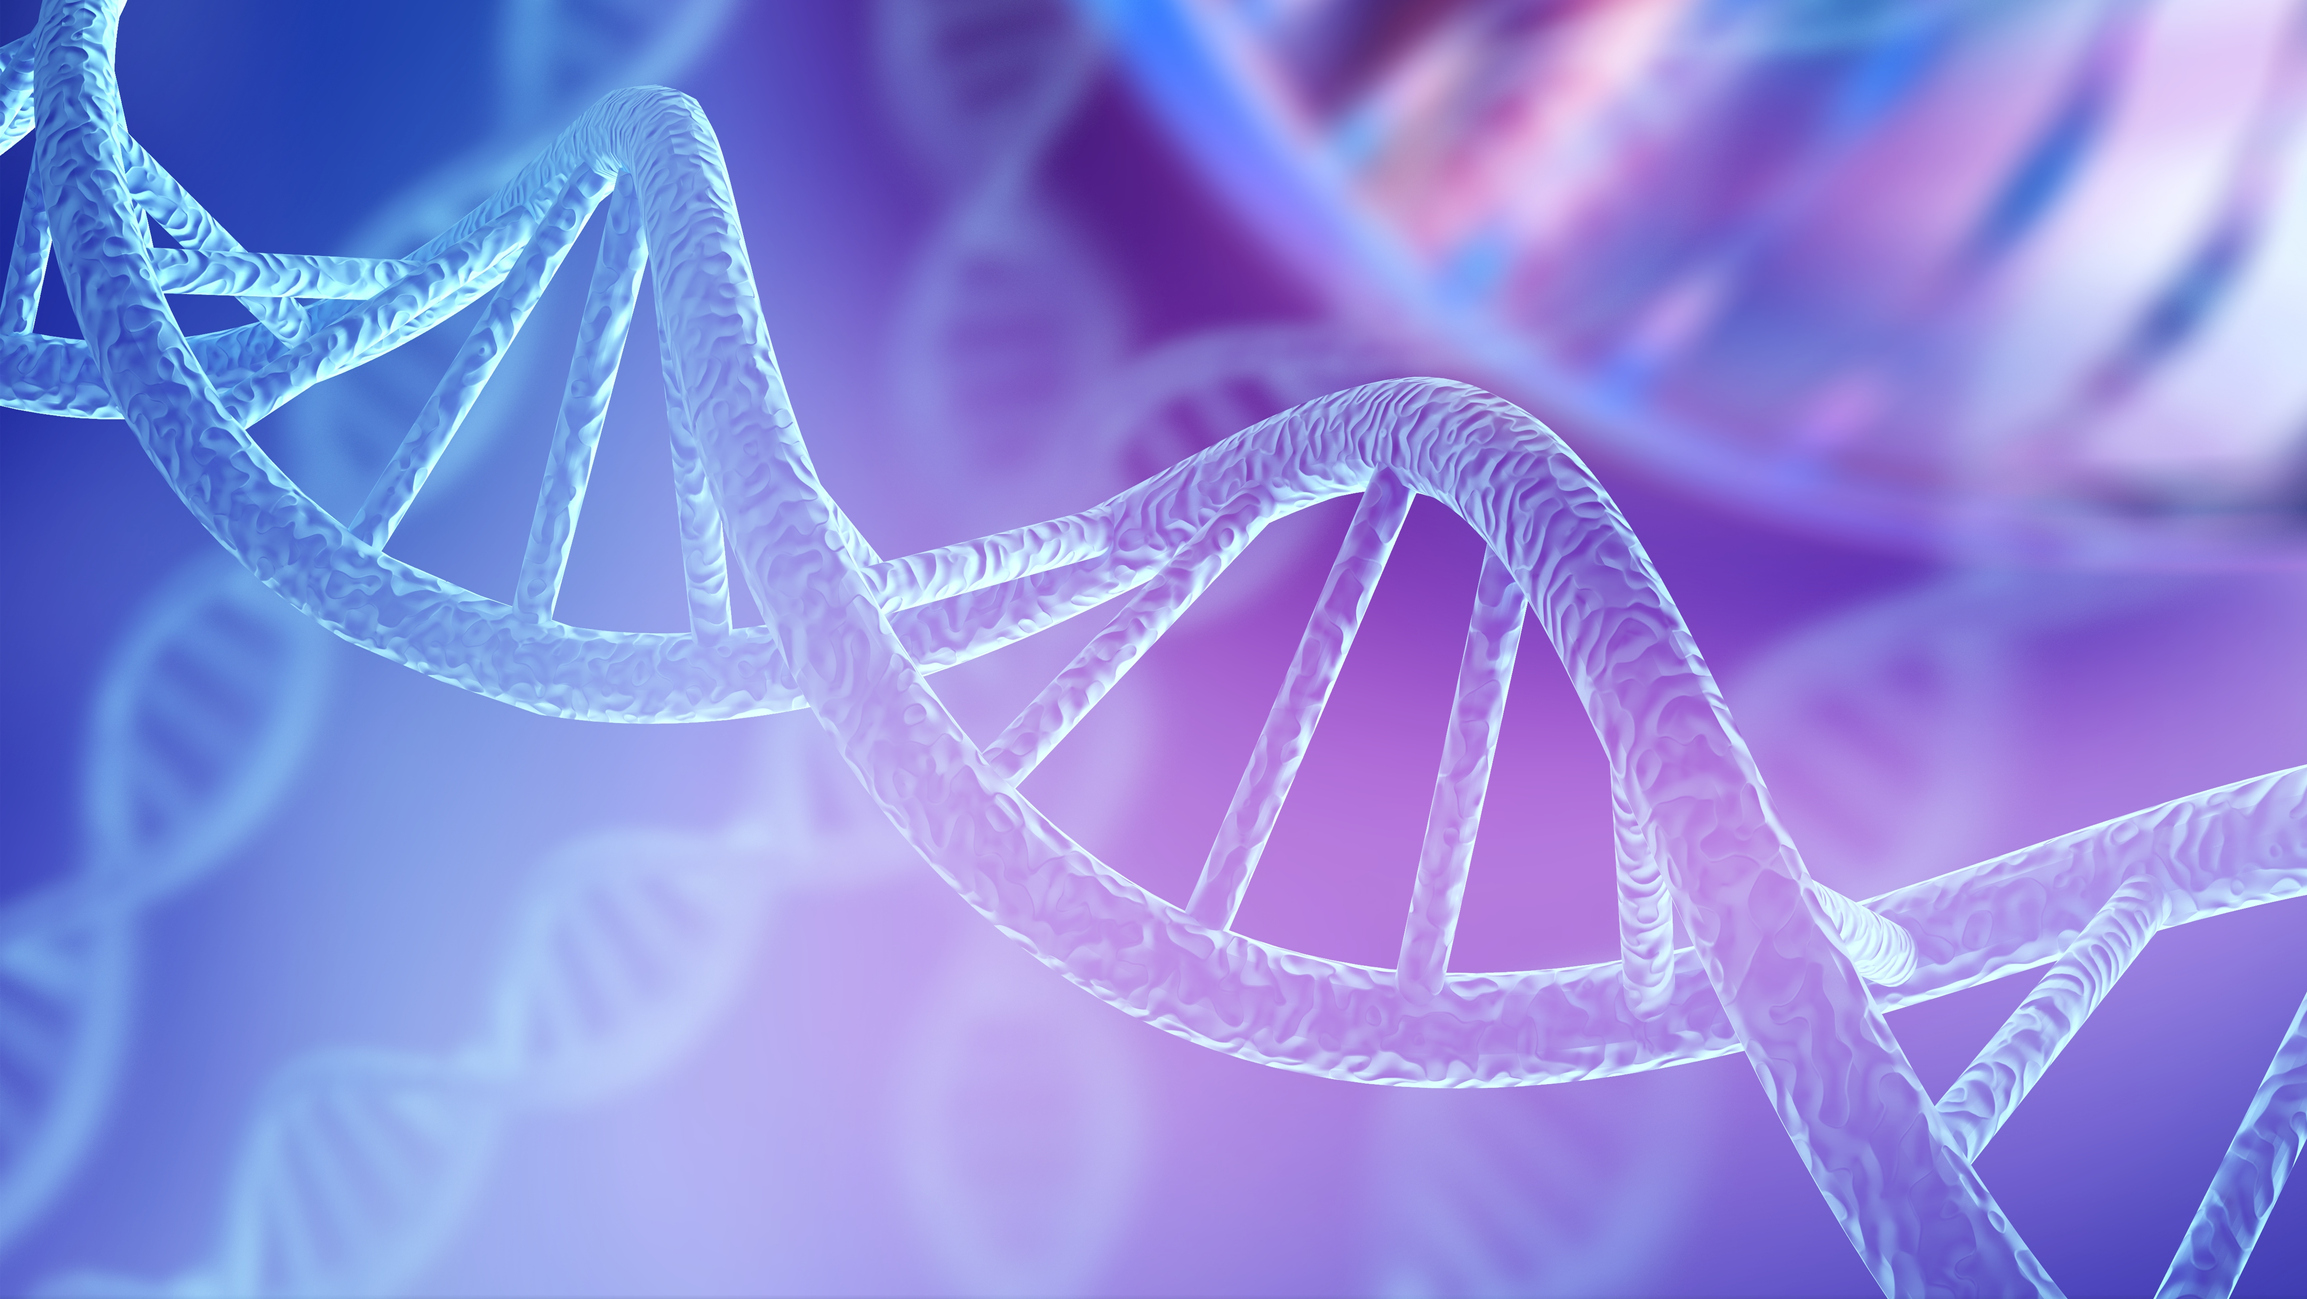 Stock image of DNA strand